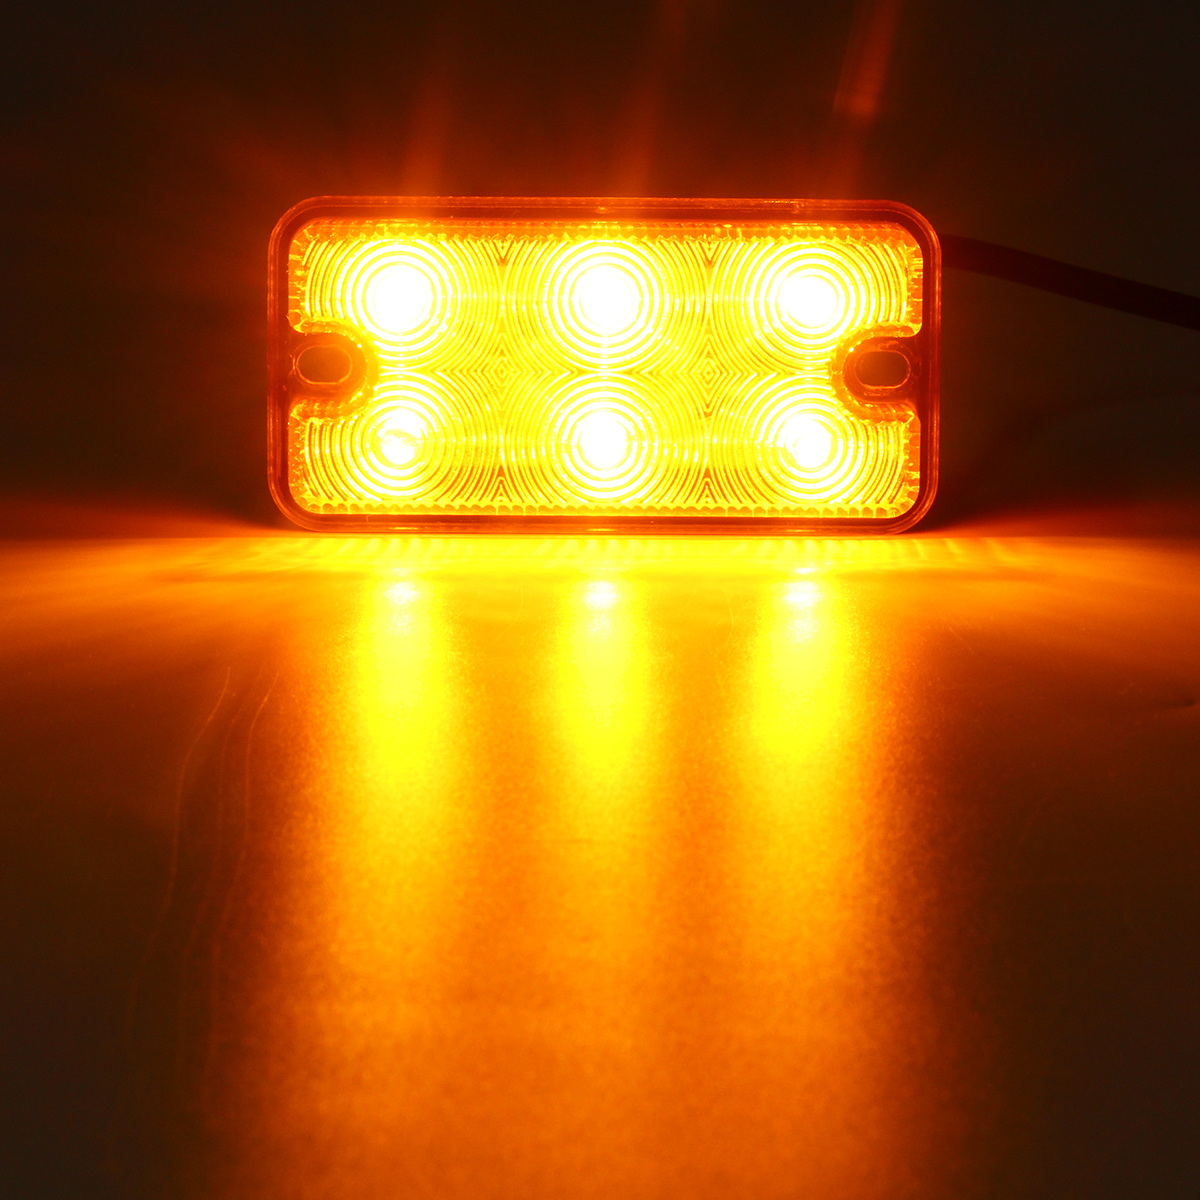 12V-80V 6 LED Indicator Amber Stop Rear Tail Lights for Boat Truck Trailer